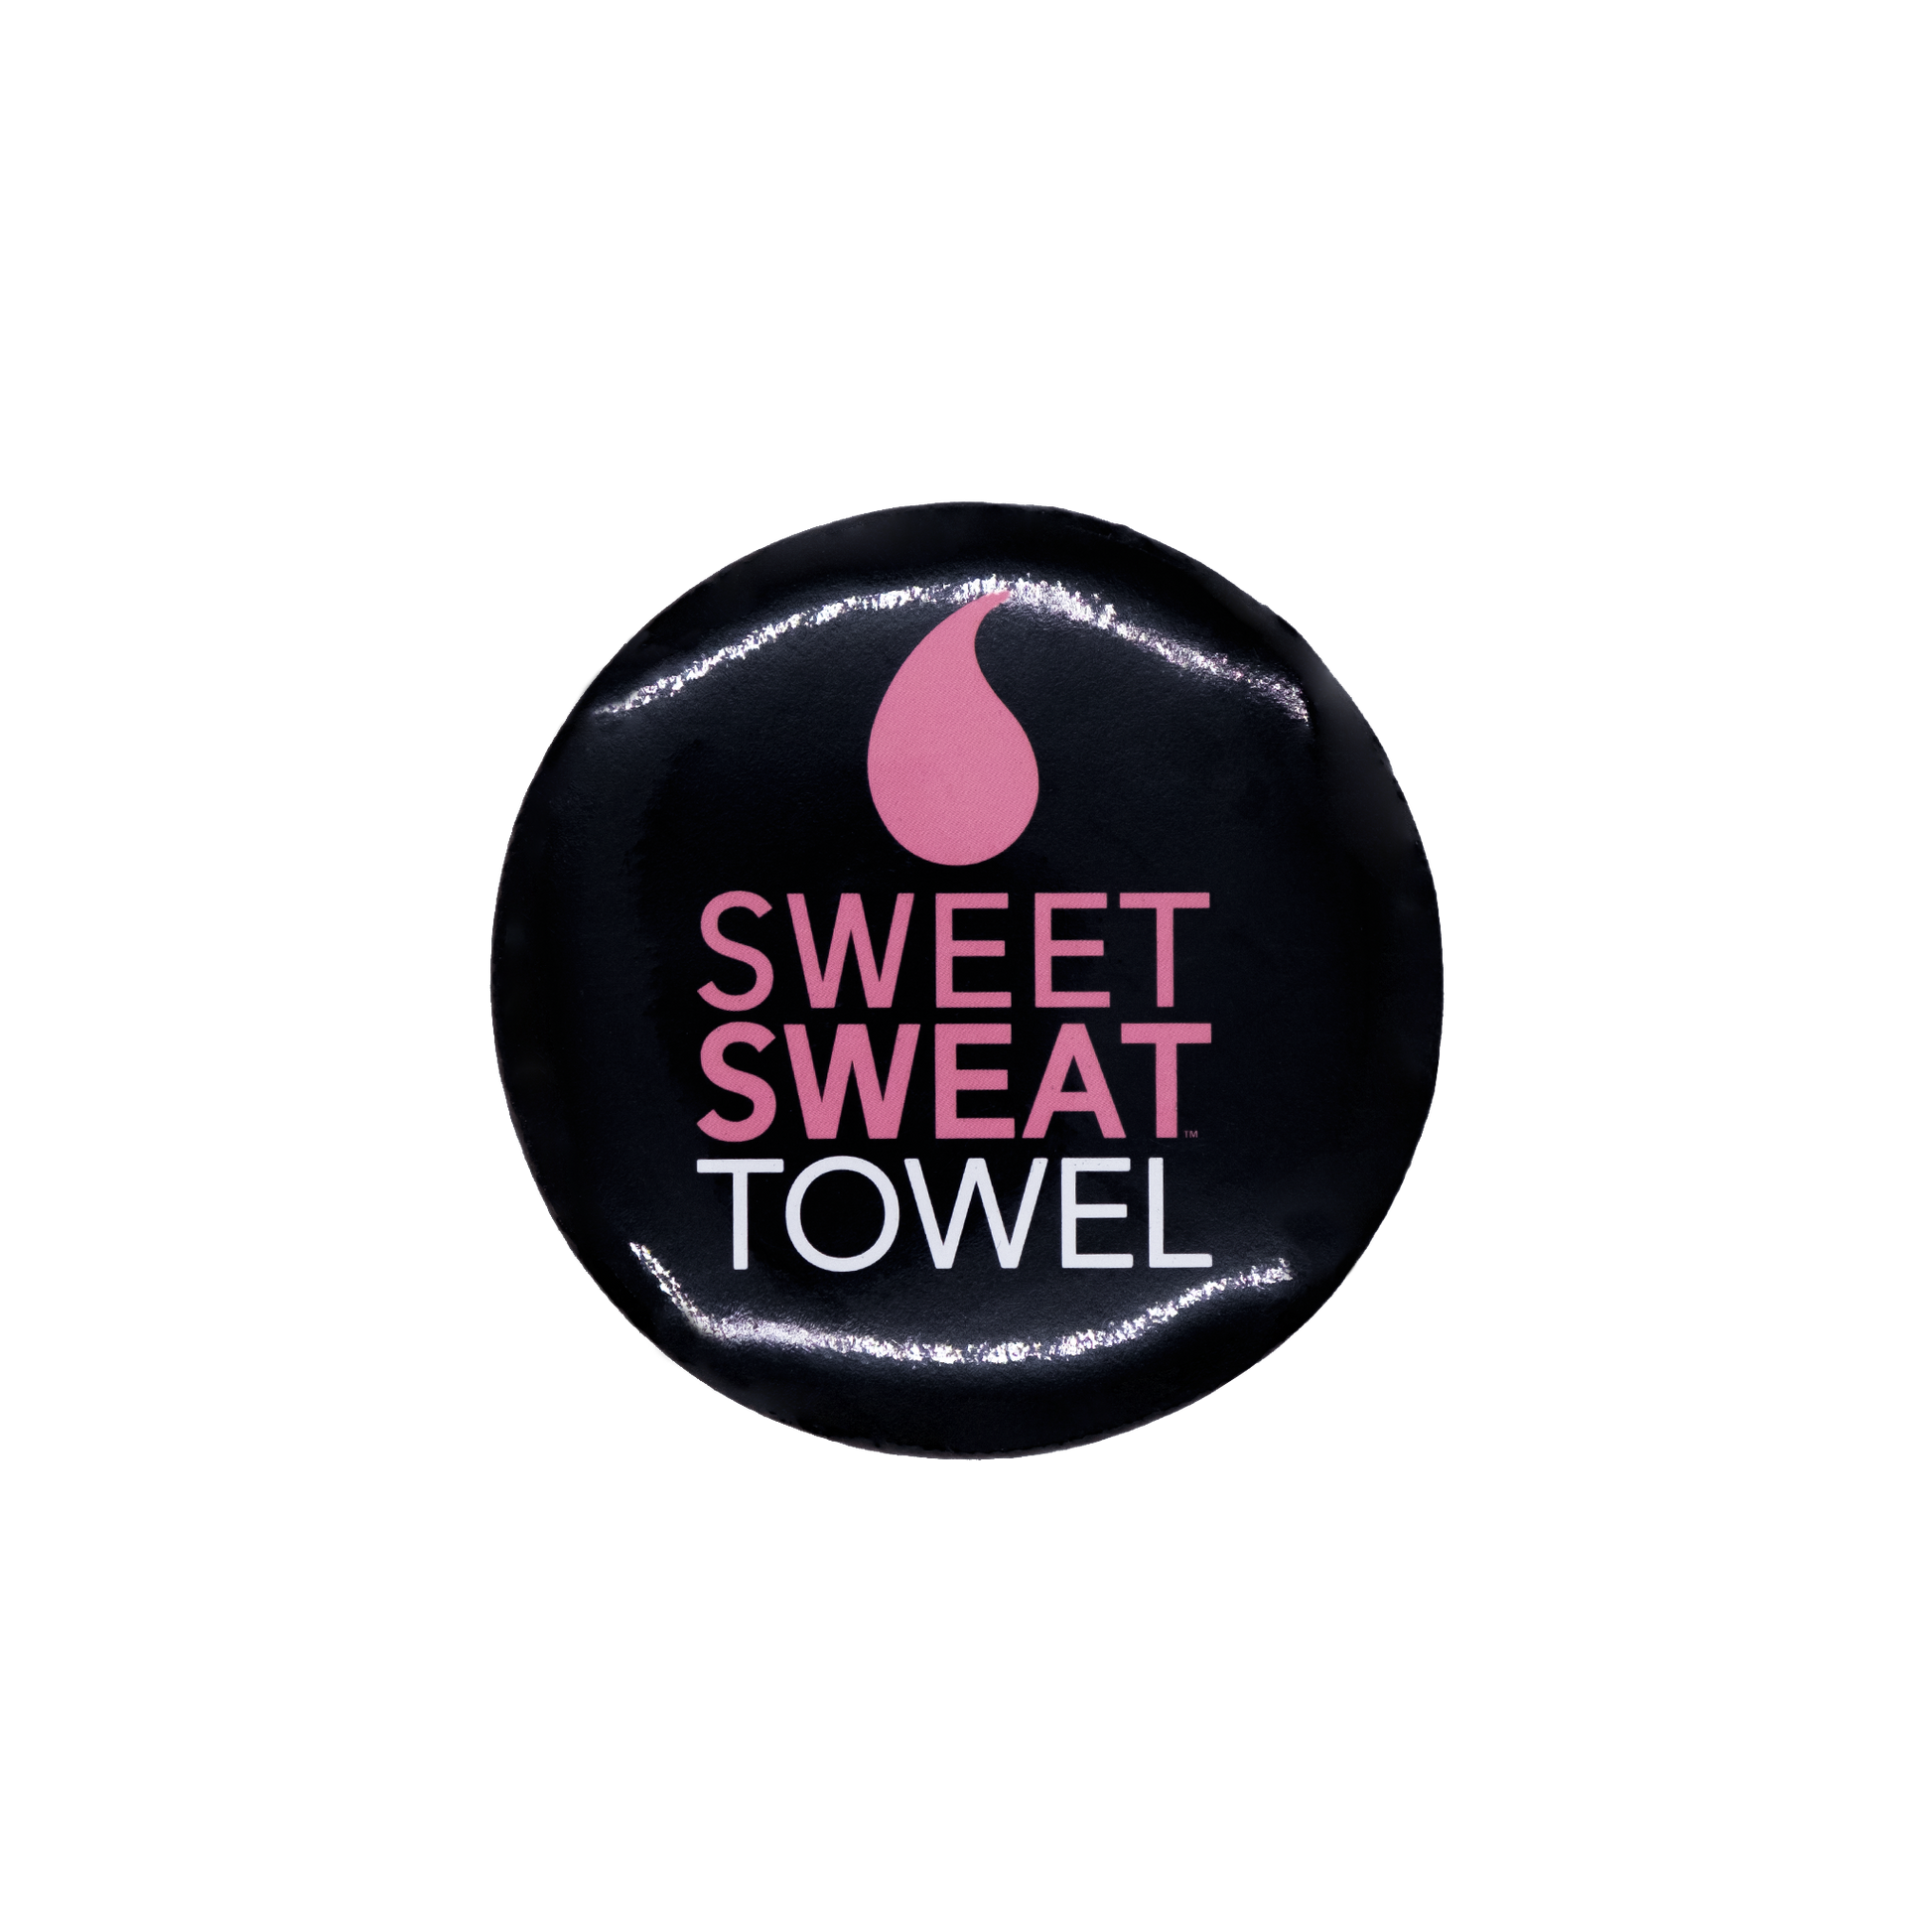 Sweet Sweat Towel black and pink logo.